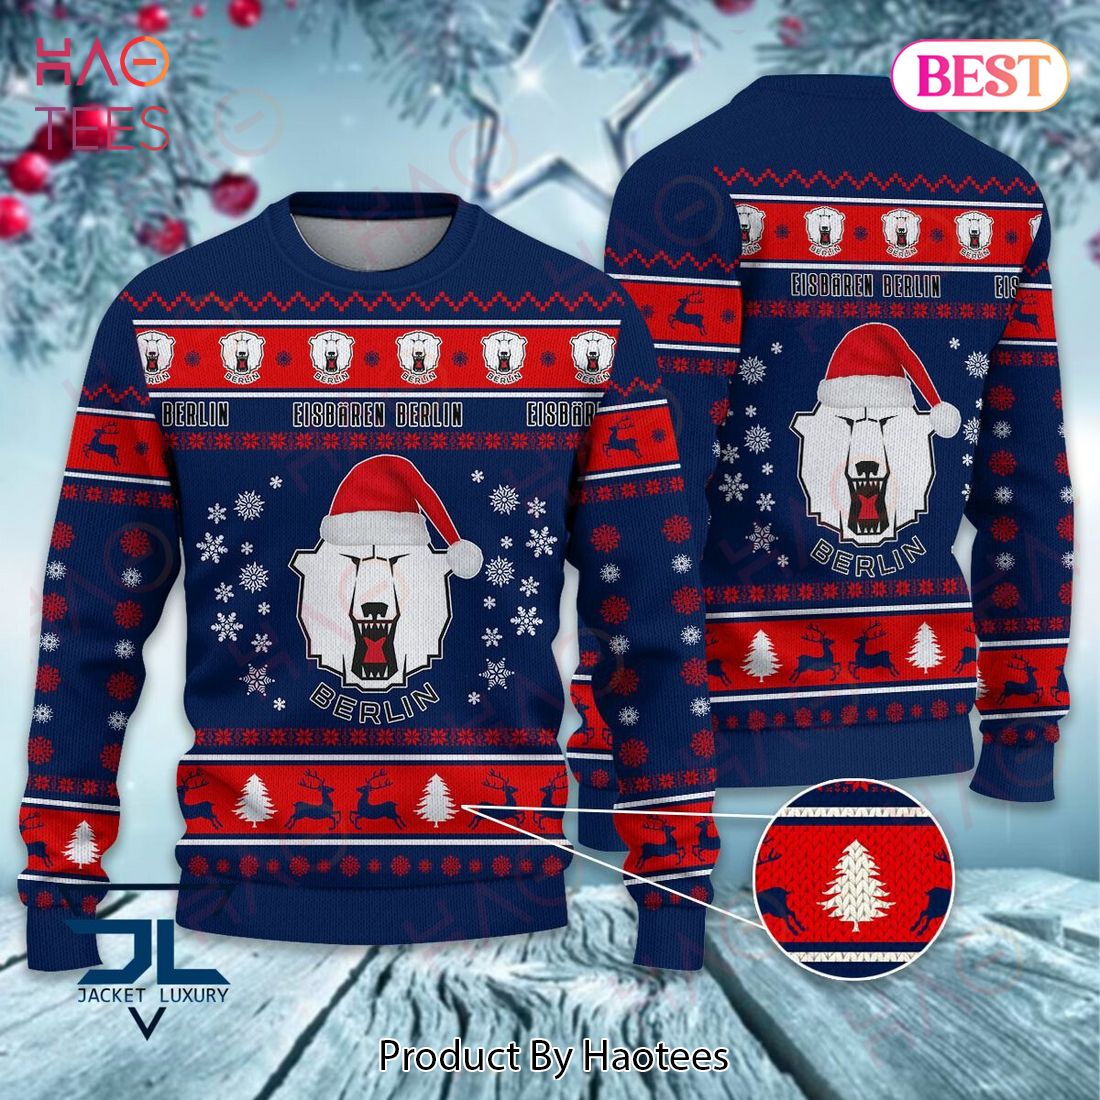 Eisbaren Berlin Christmas Luxury Brand Sweater Limited Edition